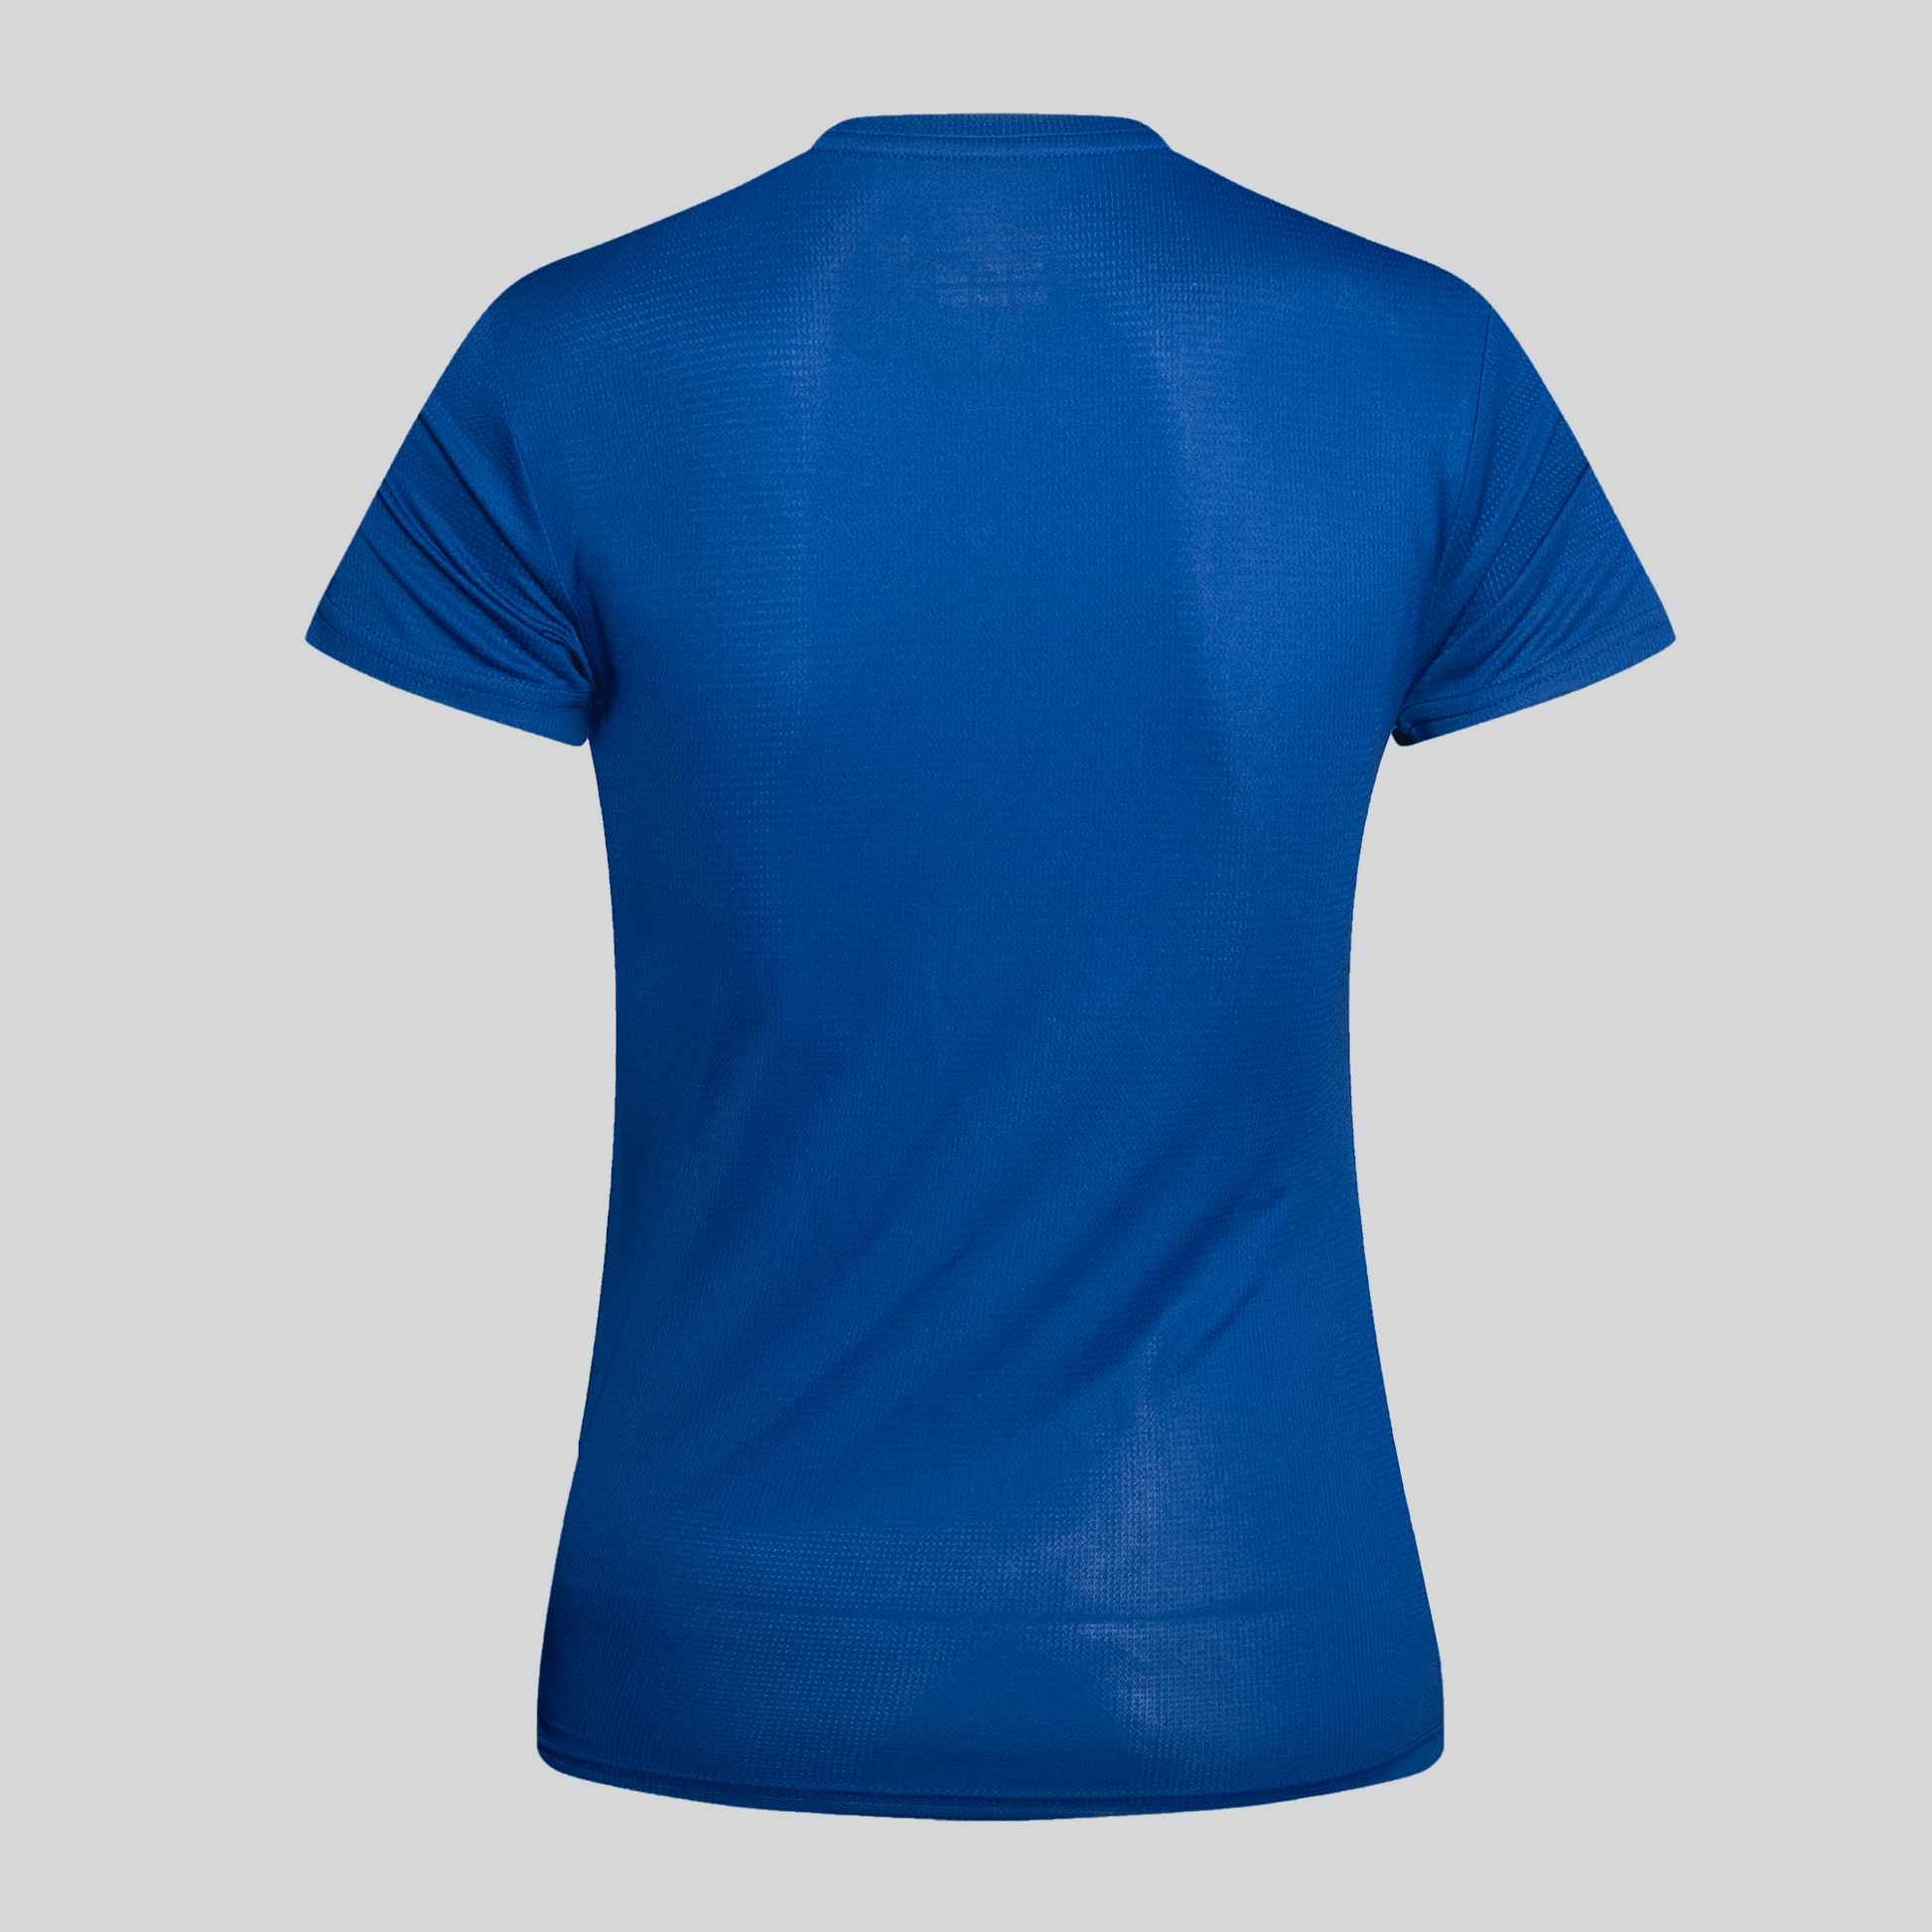 Vigor Tshirt Blue Women's - Sports Cartel